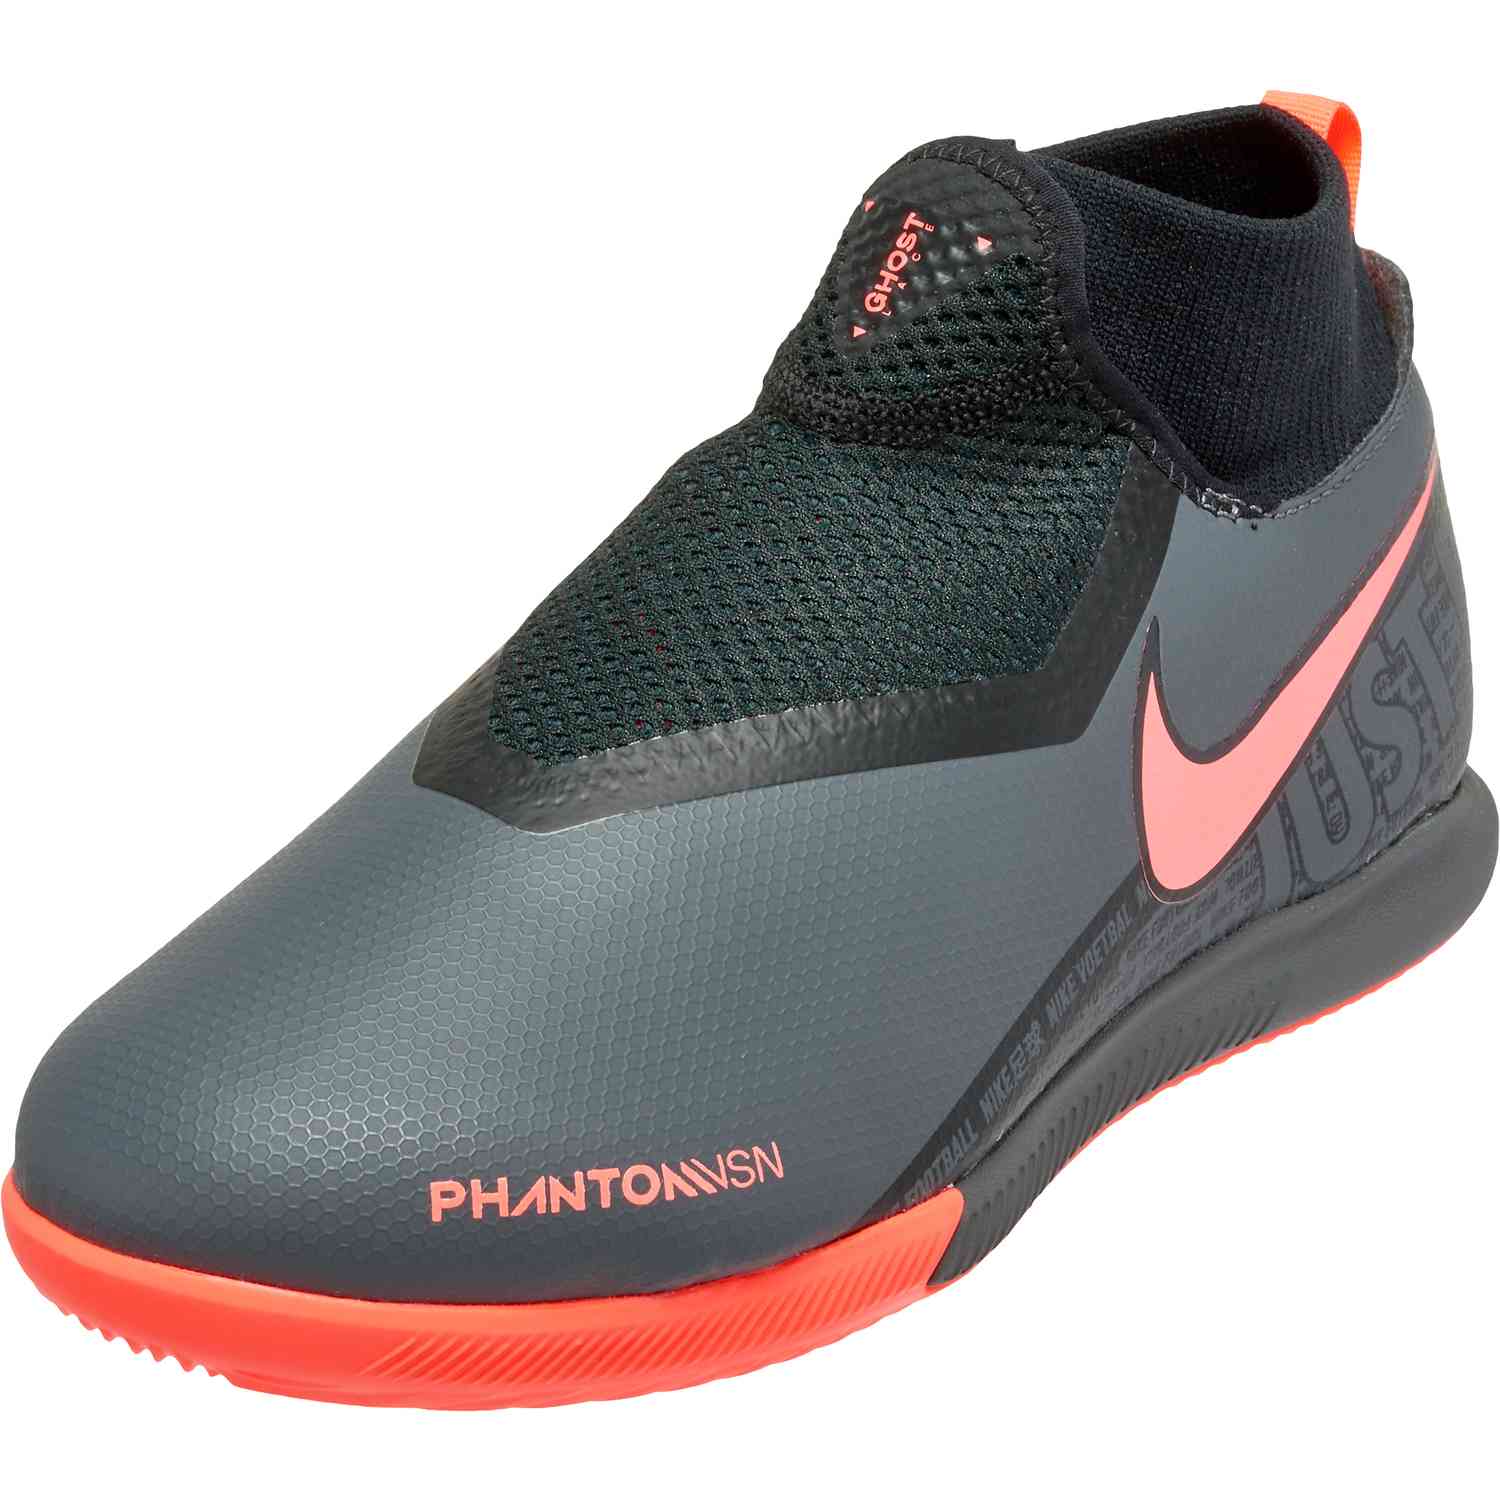 Nike Phantom Vision Pro Dynamic Fit FG Soccer Amazon.com